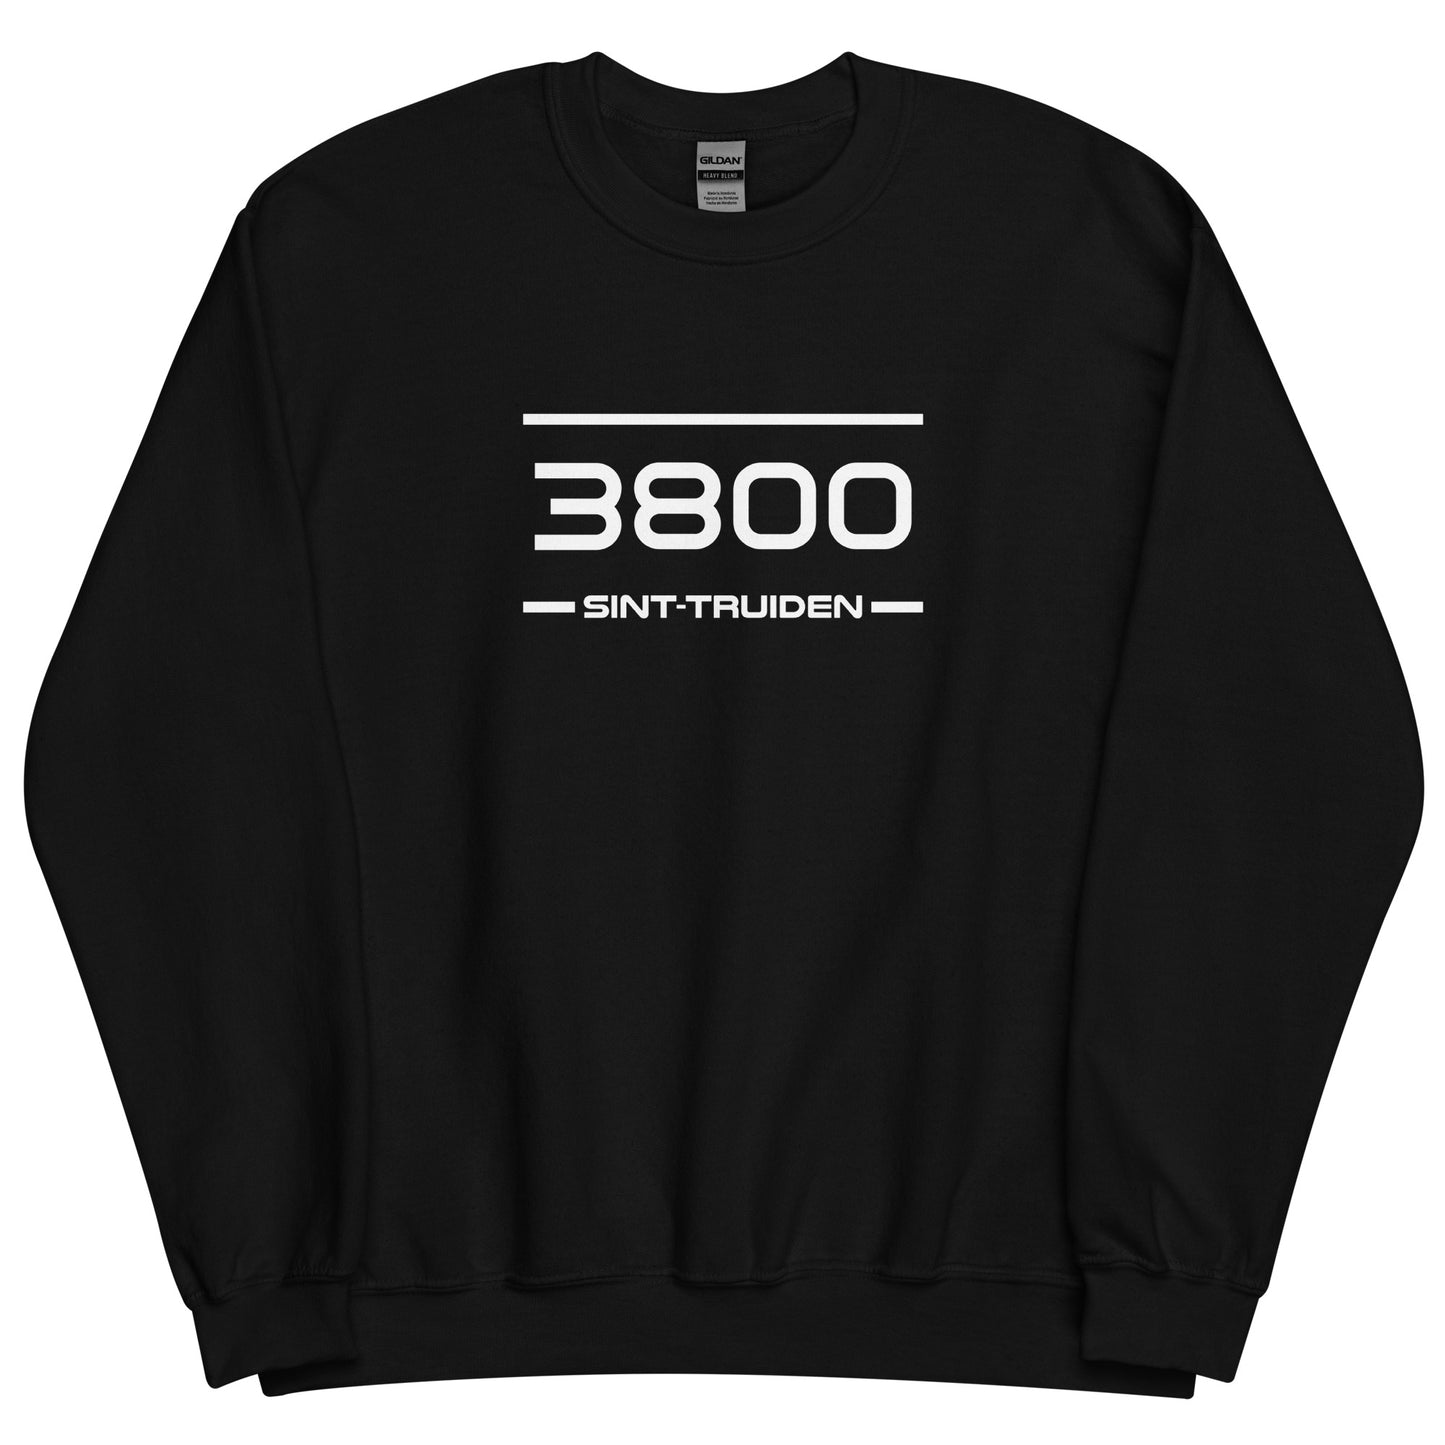 Sweater - 3800 - Sint-Truiden (M/V)